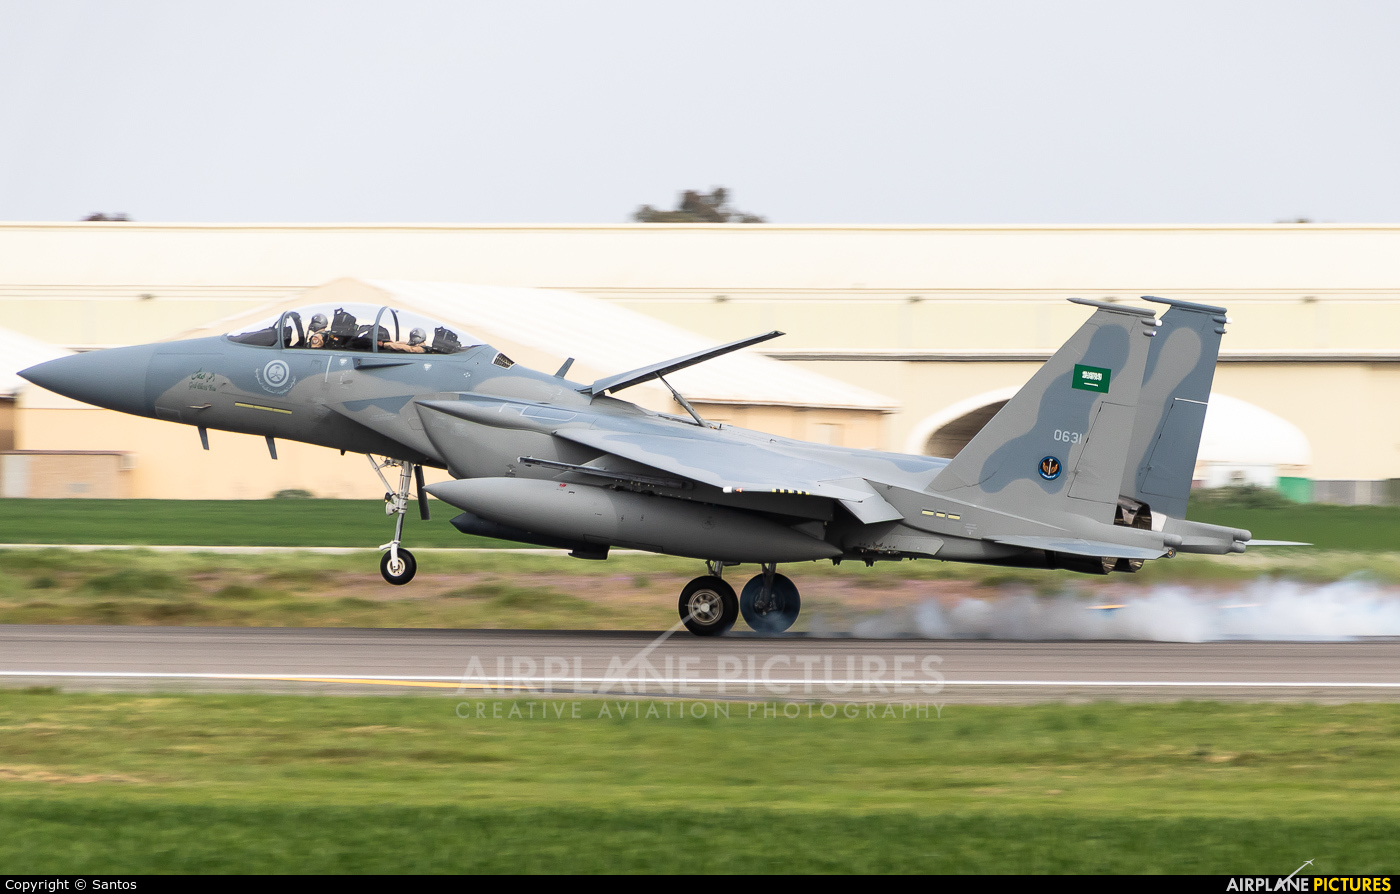 Saudi Arabia - Air Force 0631 aircraft at Seville - Moron de la Frontera